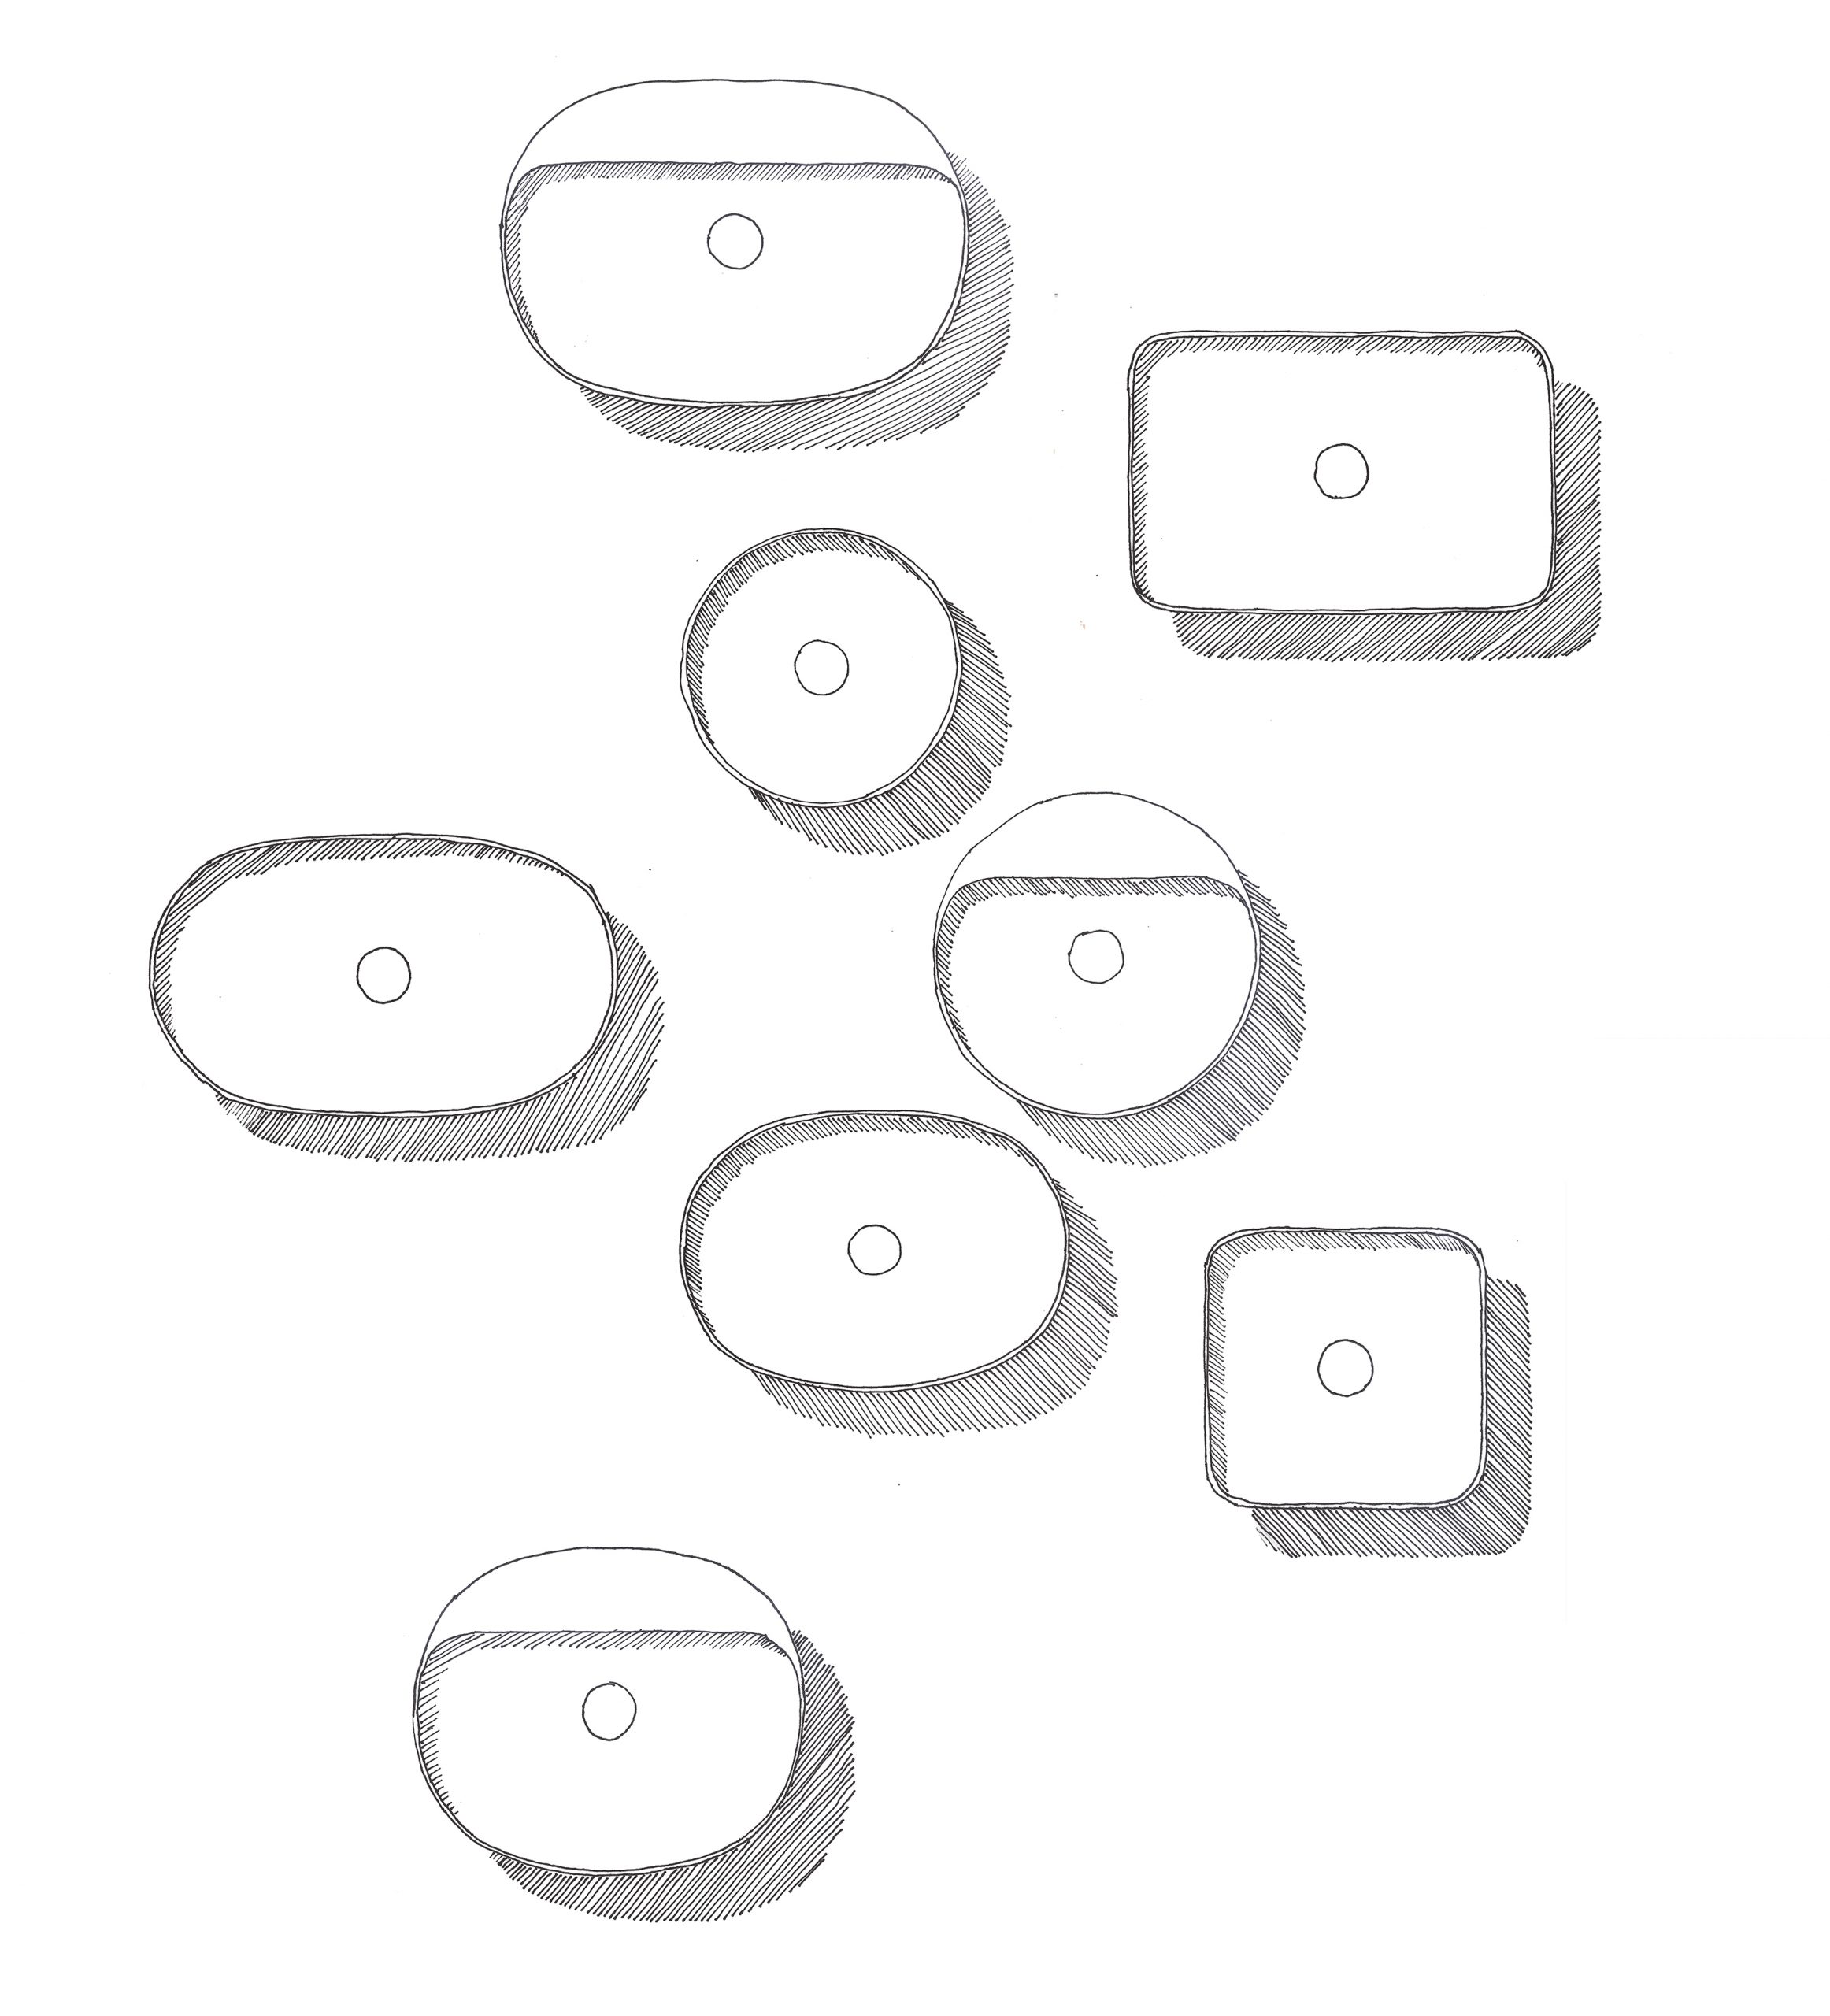 Sketch of top view of Variant washbasins designed by Debiasi Sandri for RAK Ceramics